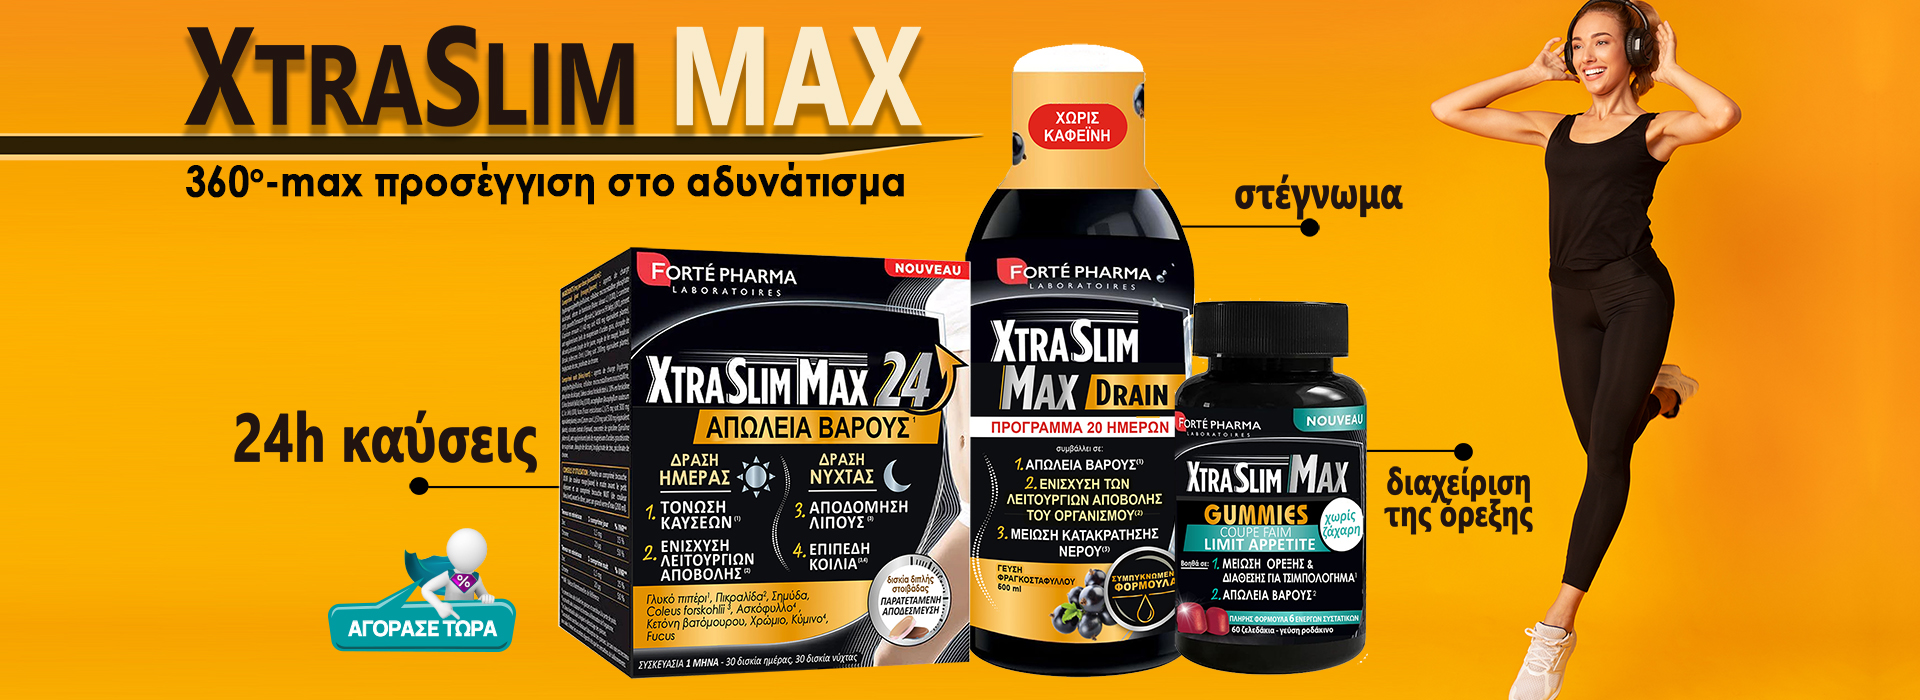 Forte Pharma XtraSlim Max